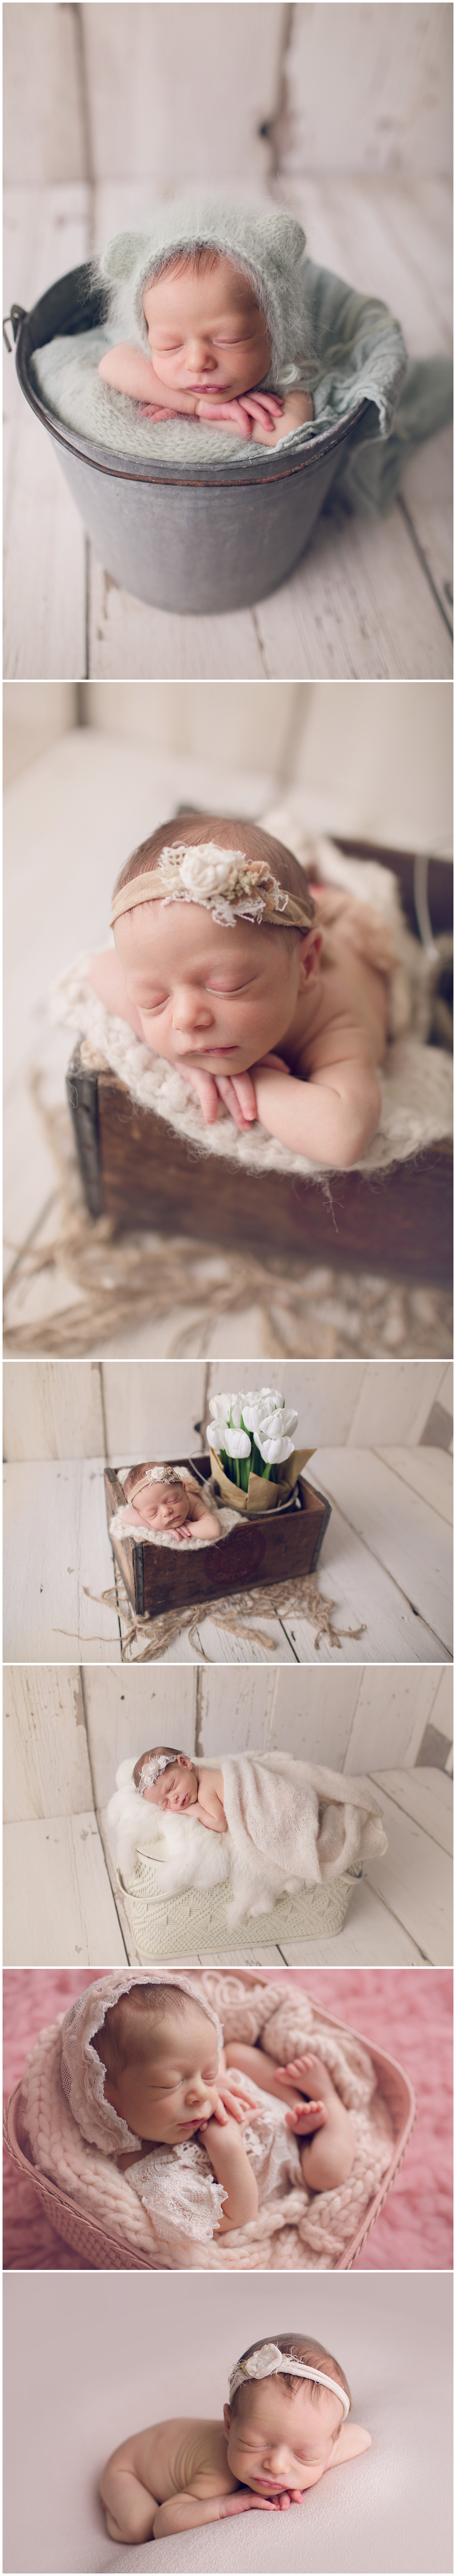 Shep | Chicago Newborn Photographer | Patricia Anderson Photography